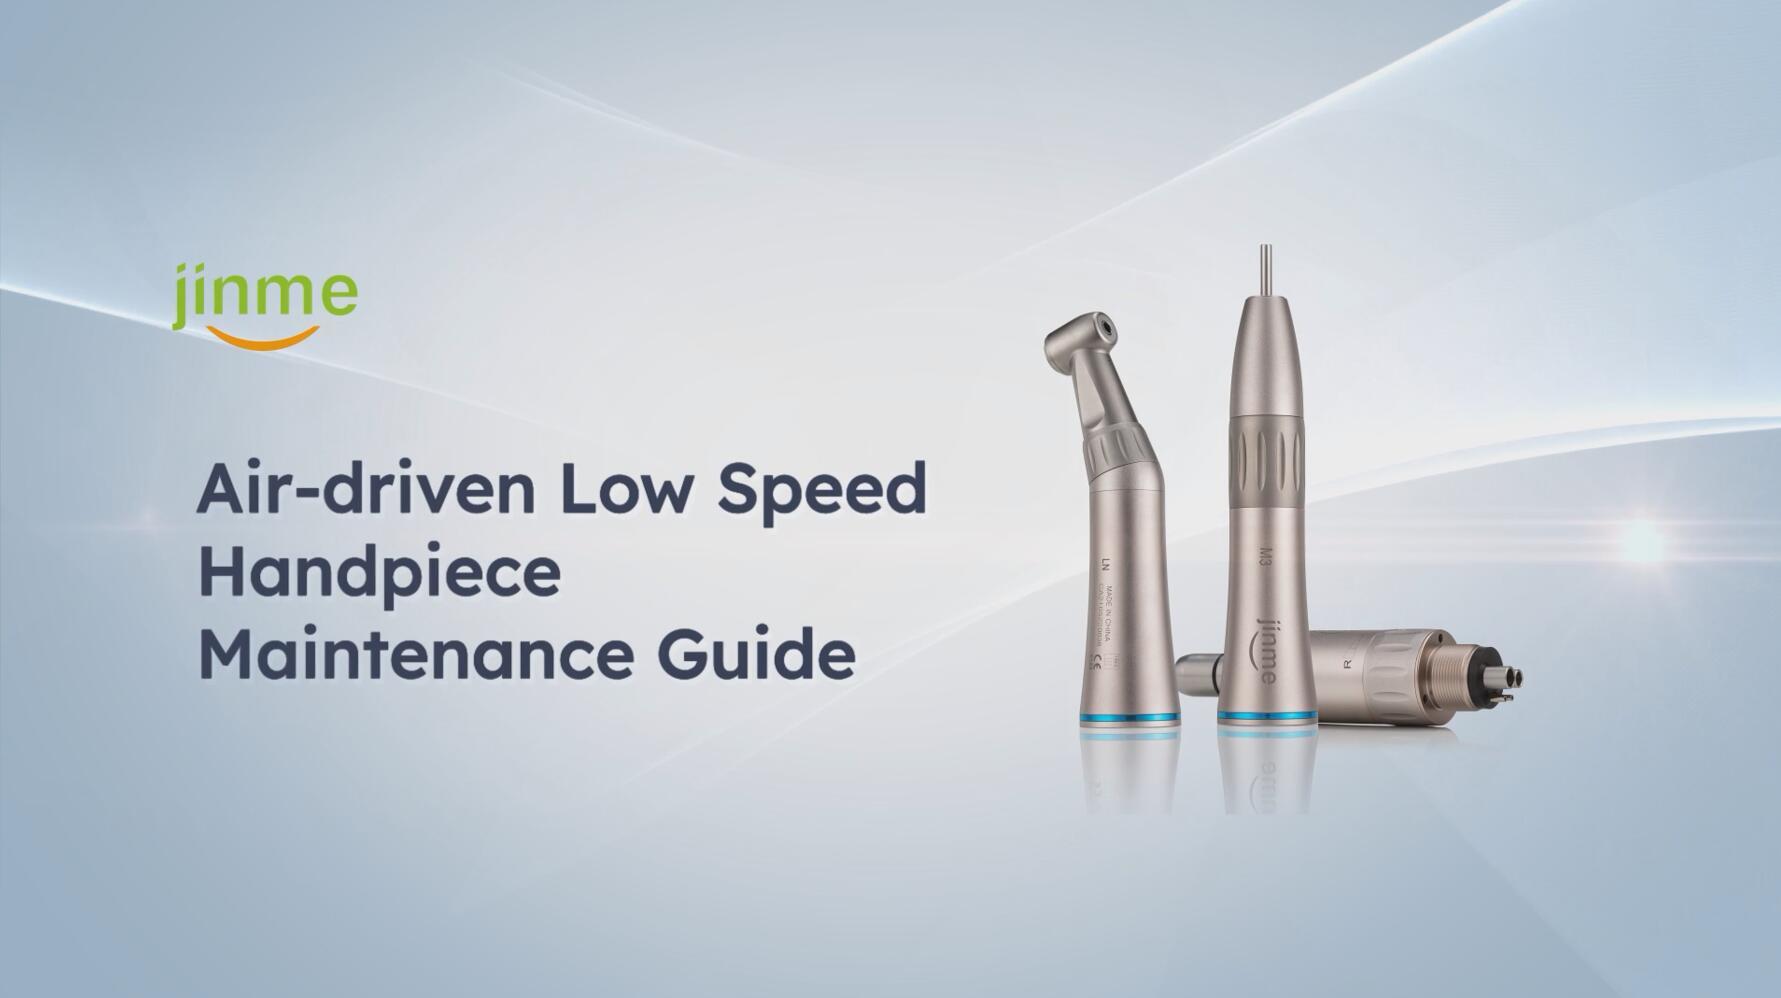 Maintenance of pneumatic turbine low-speed dental handpieces